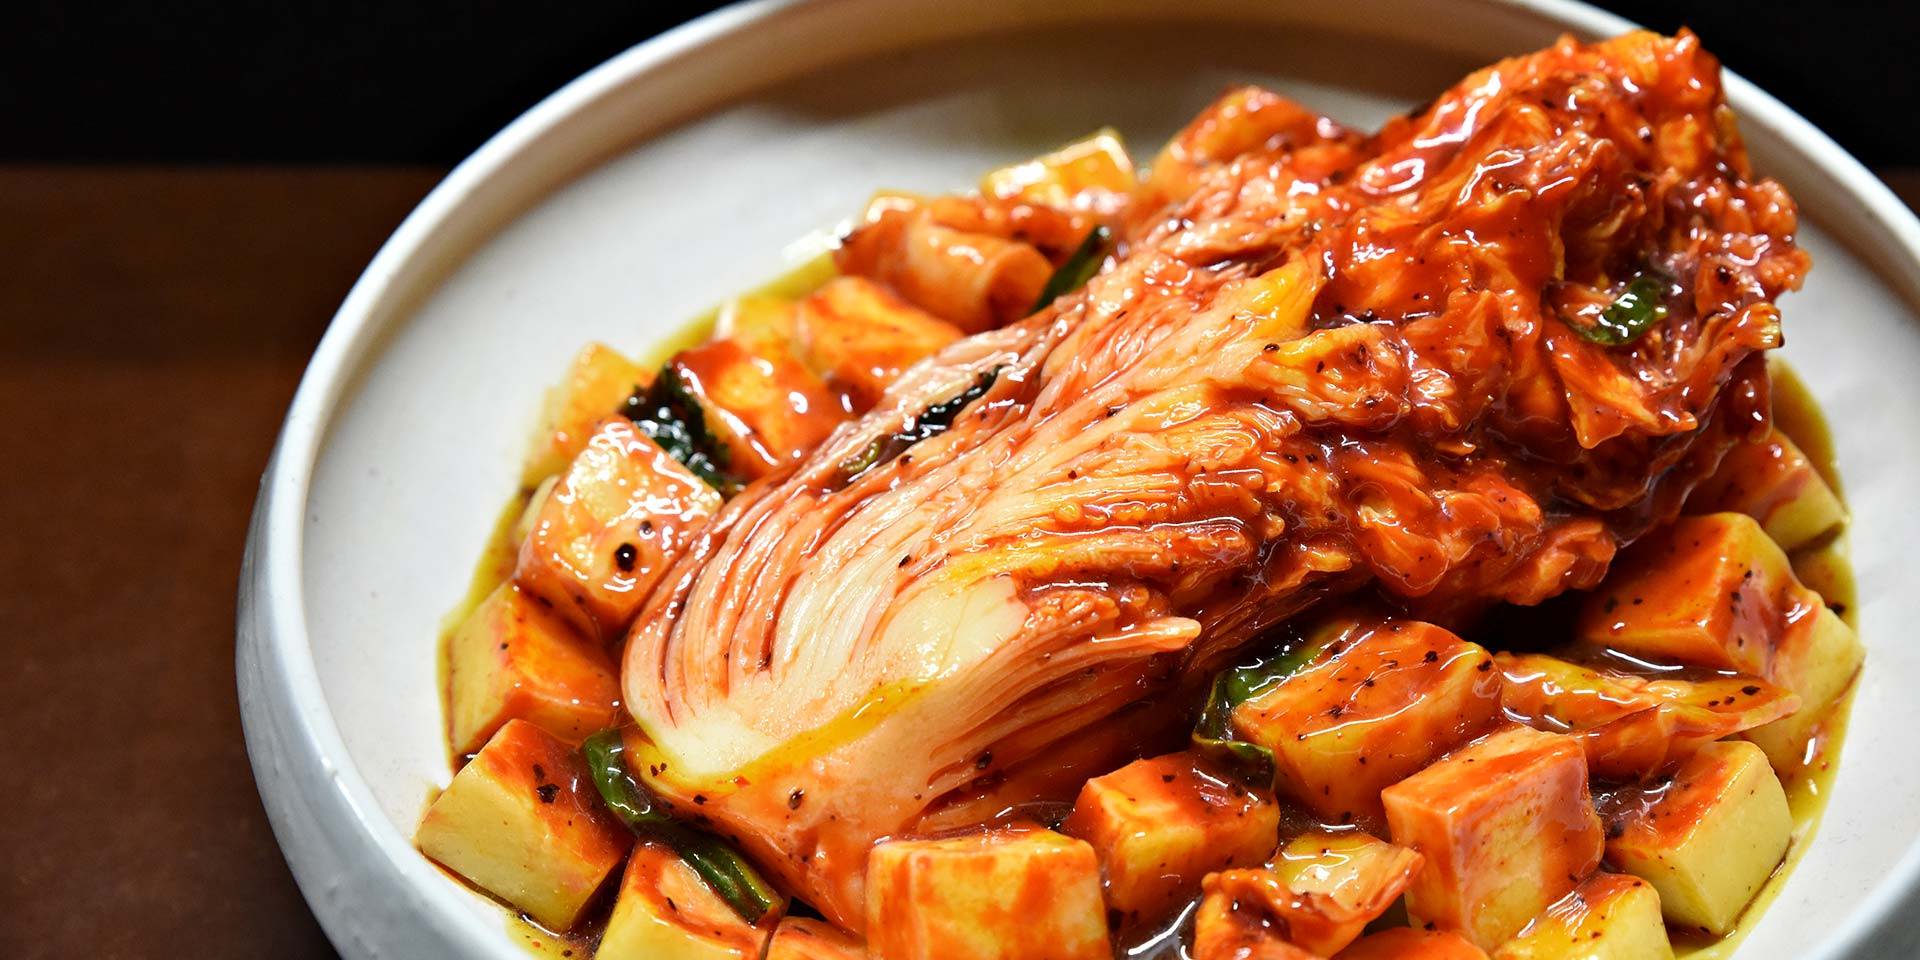 Delicious napa kimchi on top of soft tofu